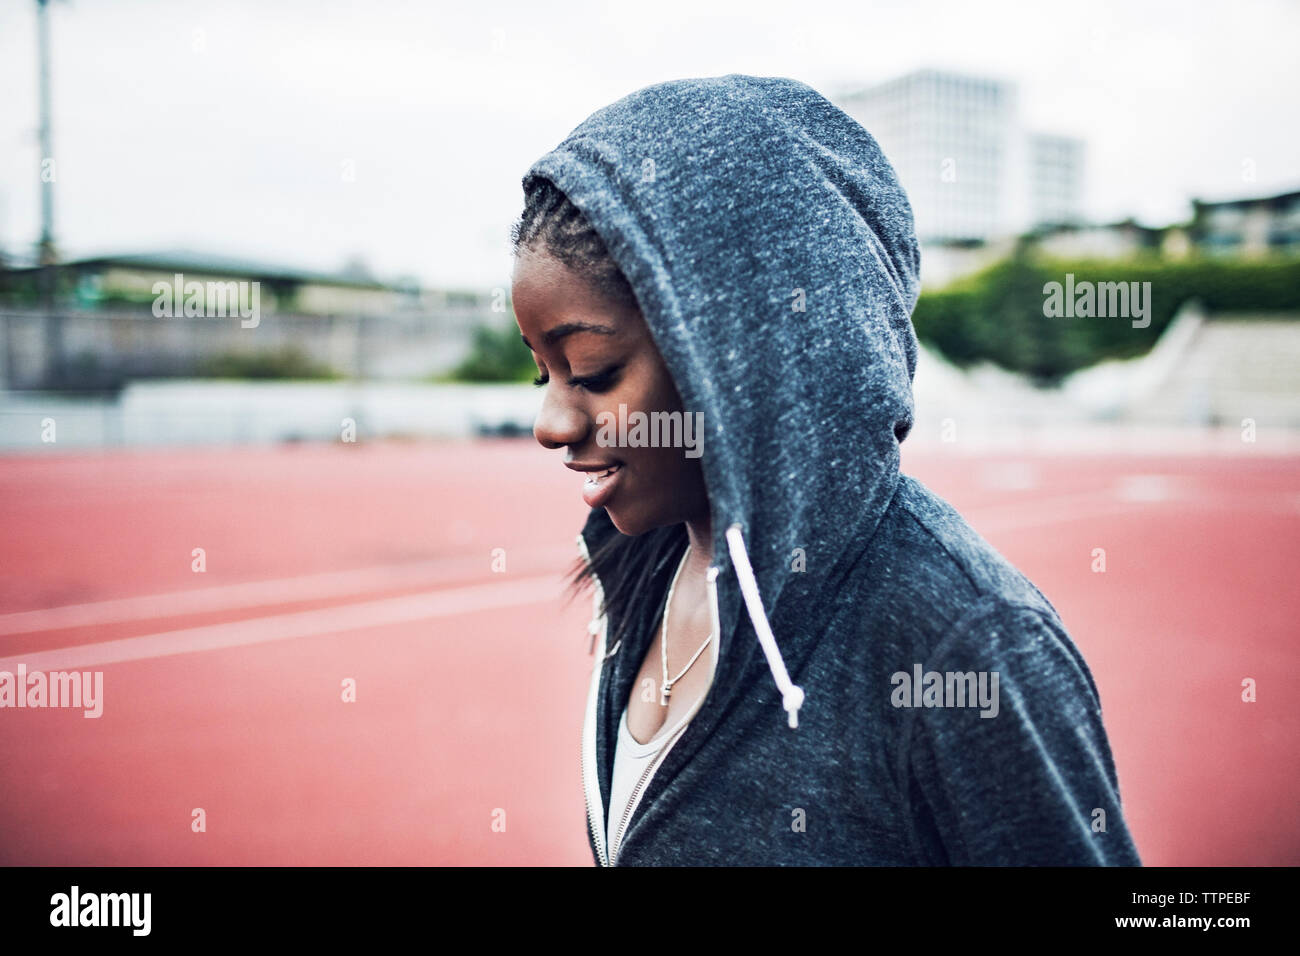 Smiling sportswoman wearing hooded jacket on running tracks Stock Photo